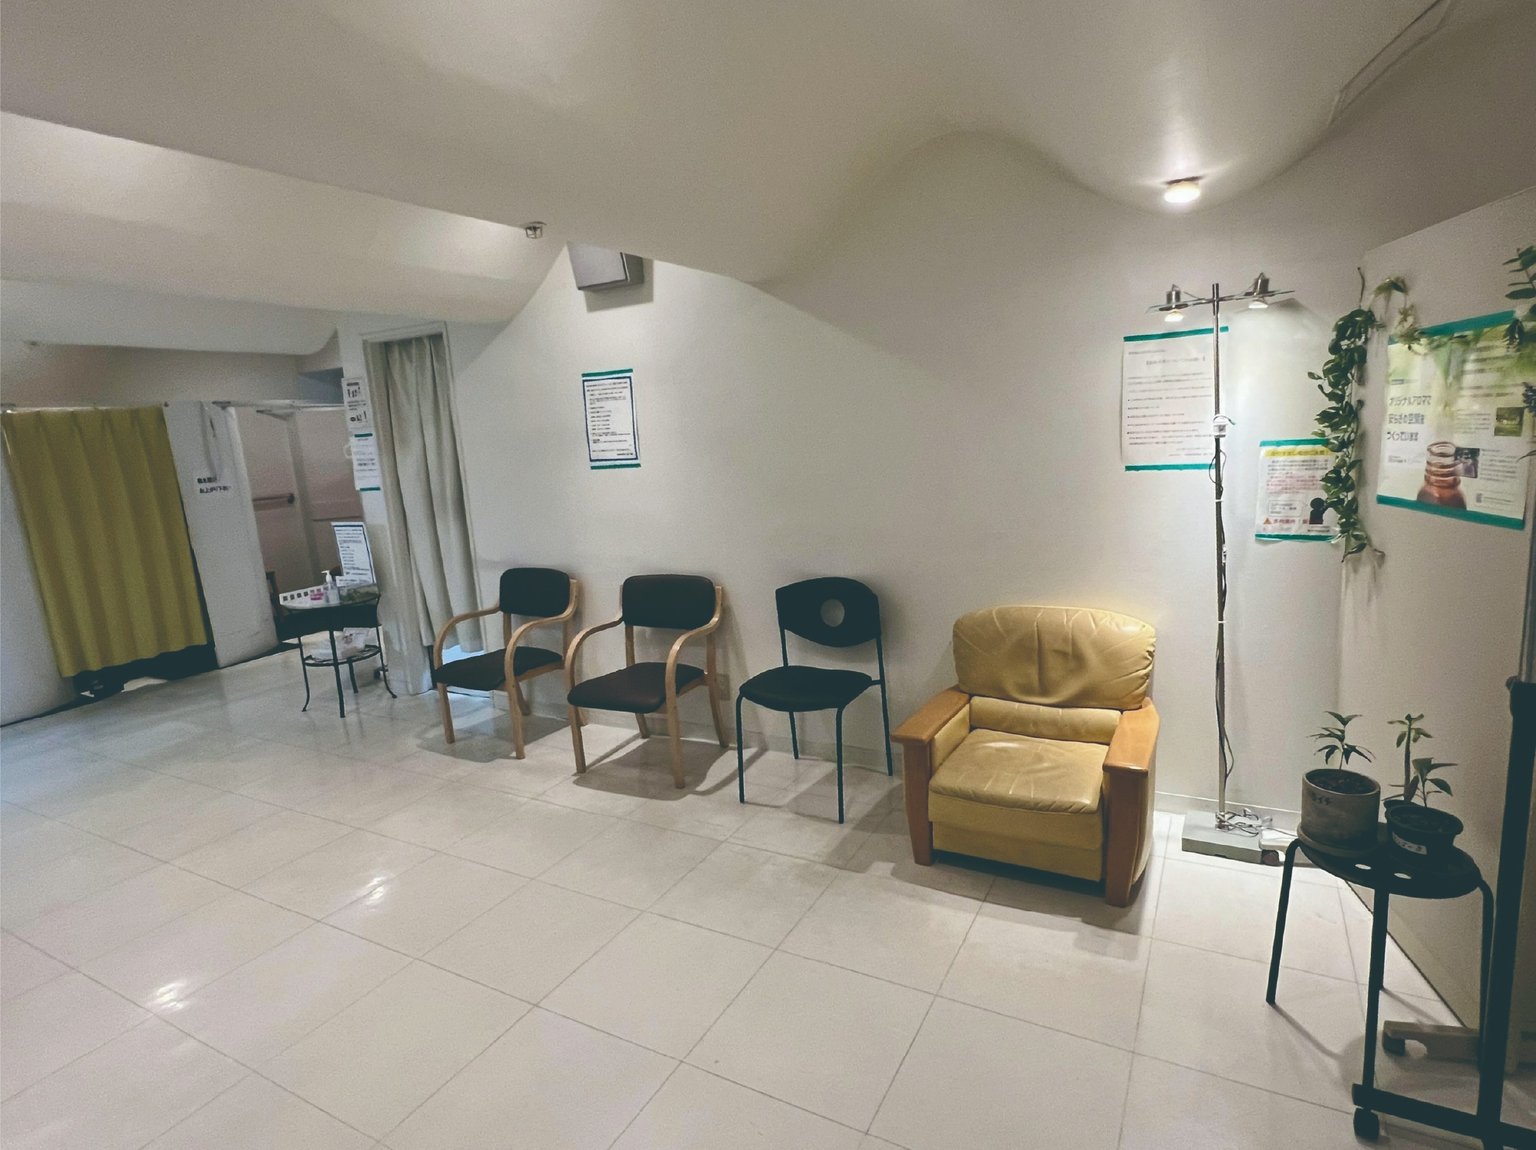 Waiting room of the radiation treatment room at Edogawa Hospital